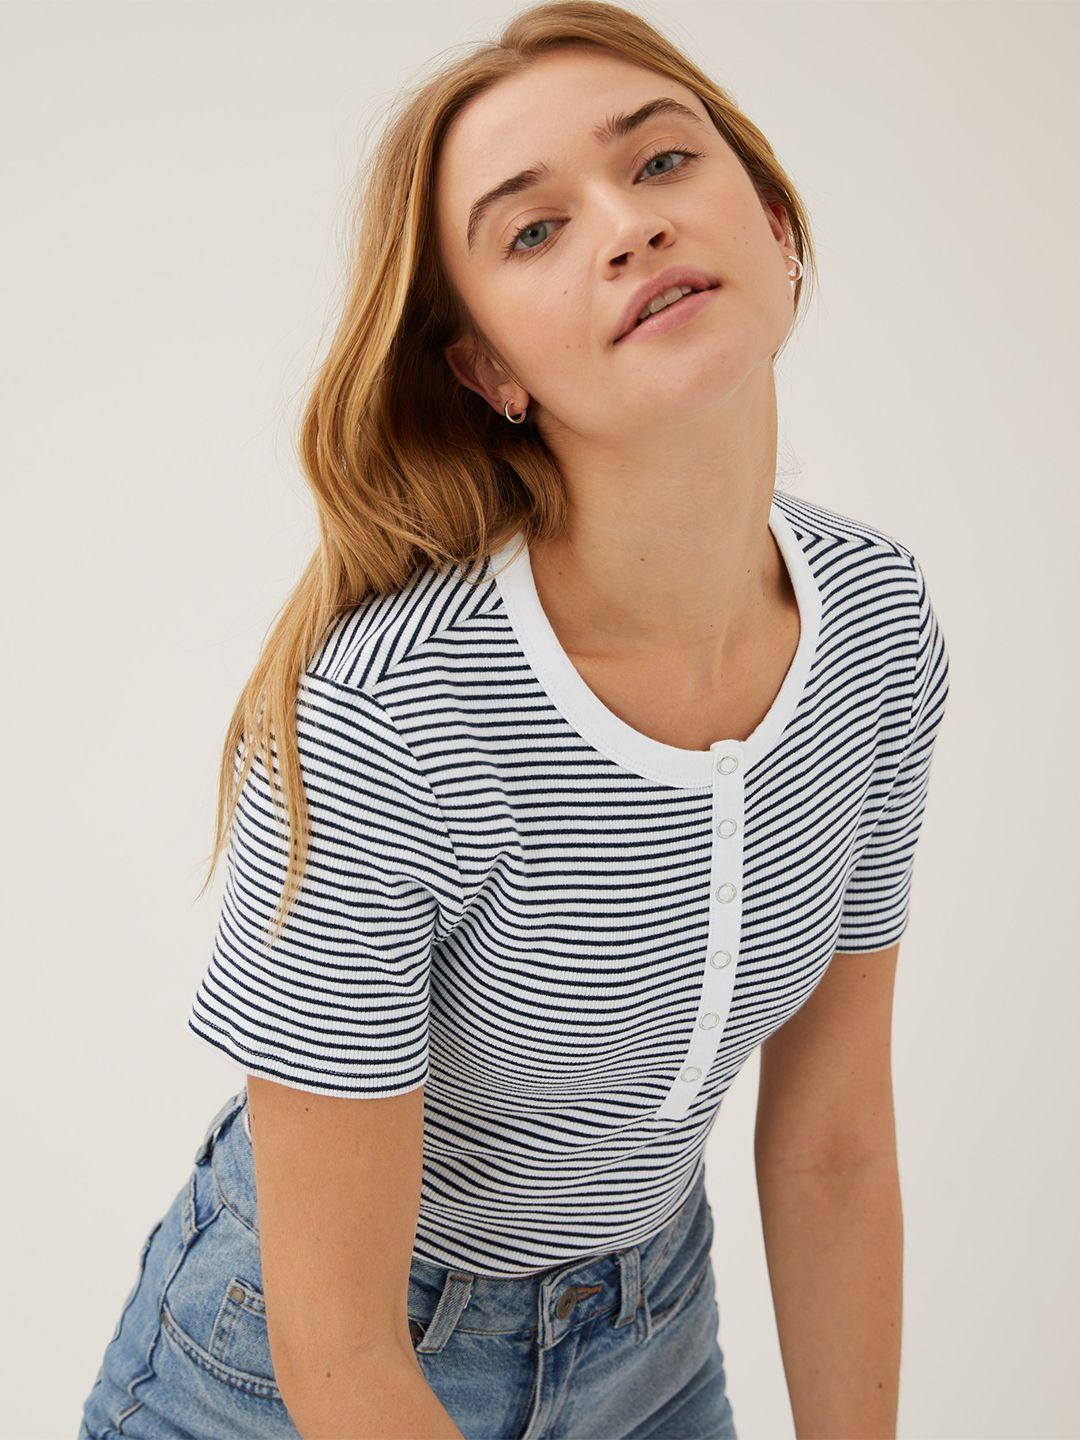 marks & spencer women navy blue striped t-shirt